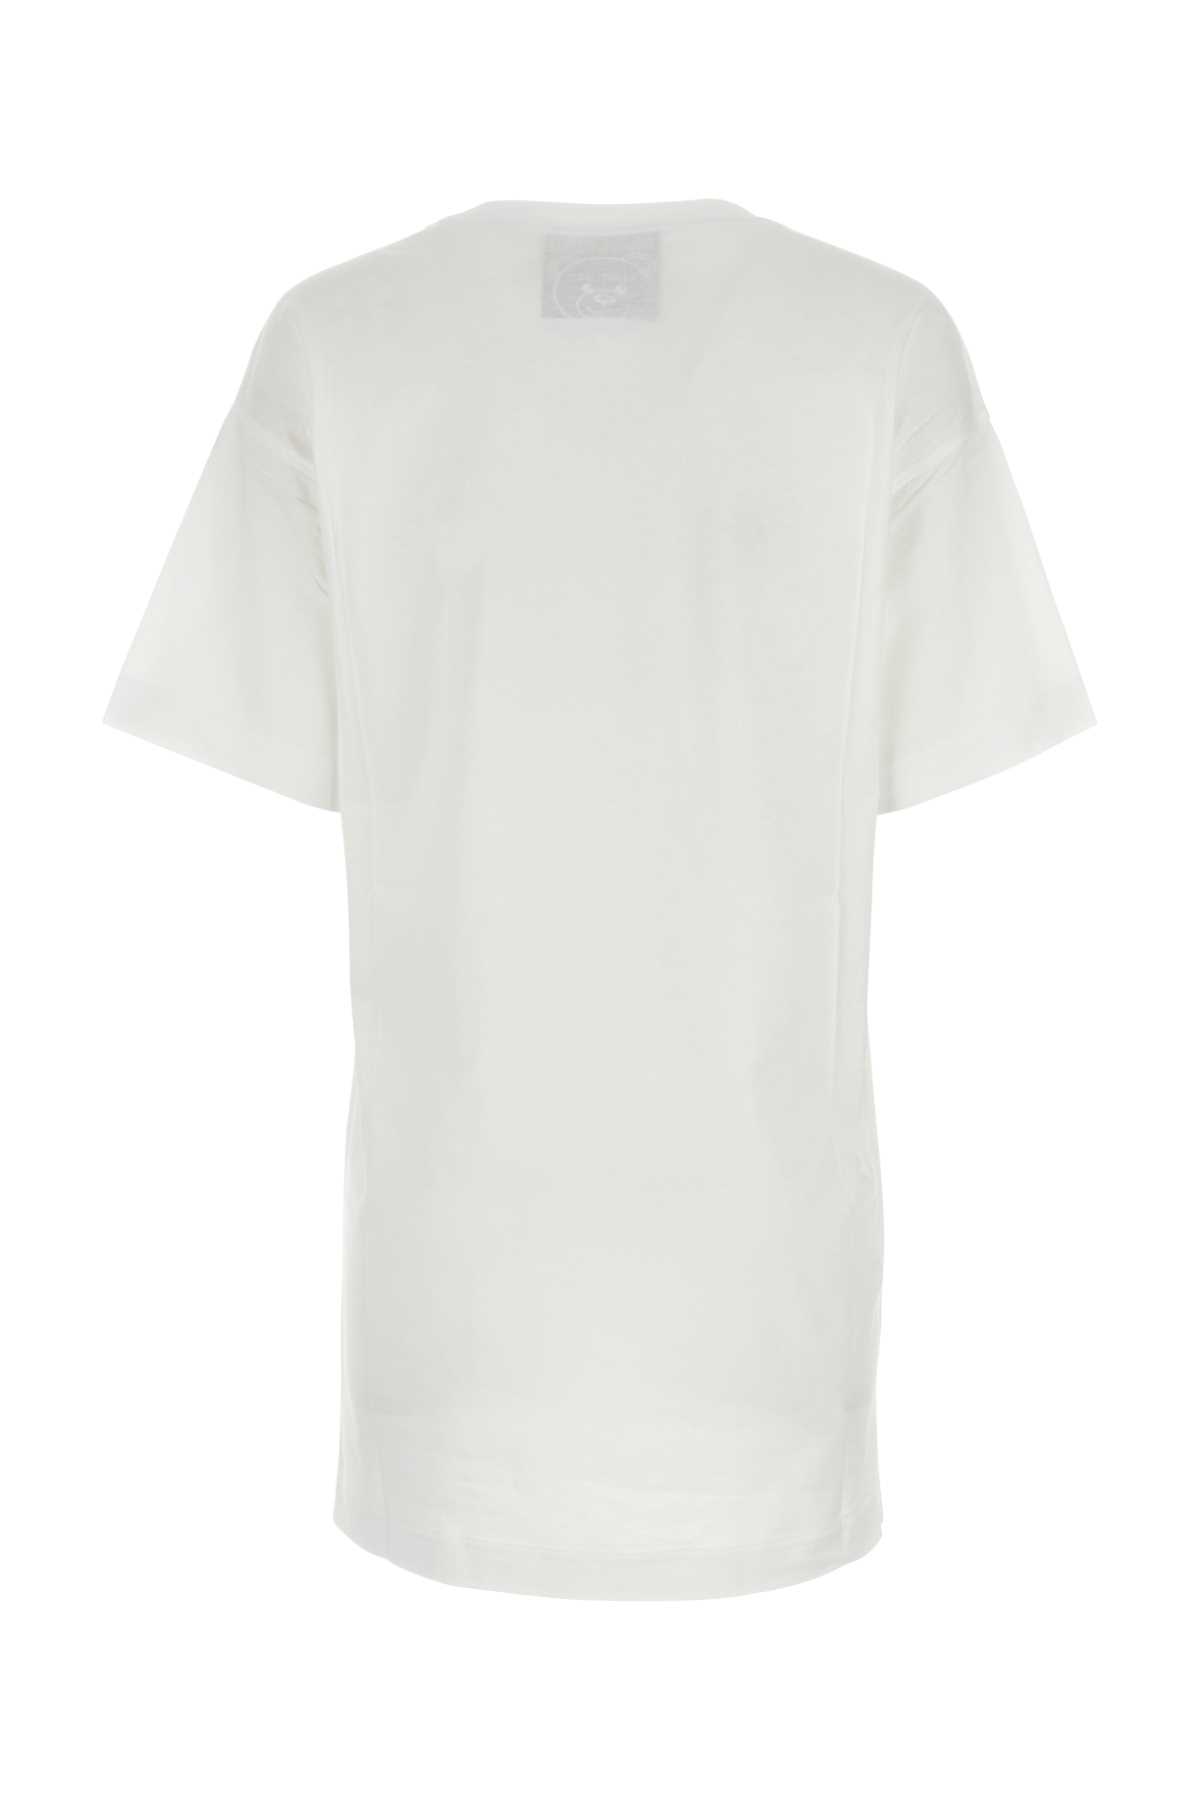 Moschino White Cotton T-shirt Dress In Fantasiabianco